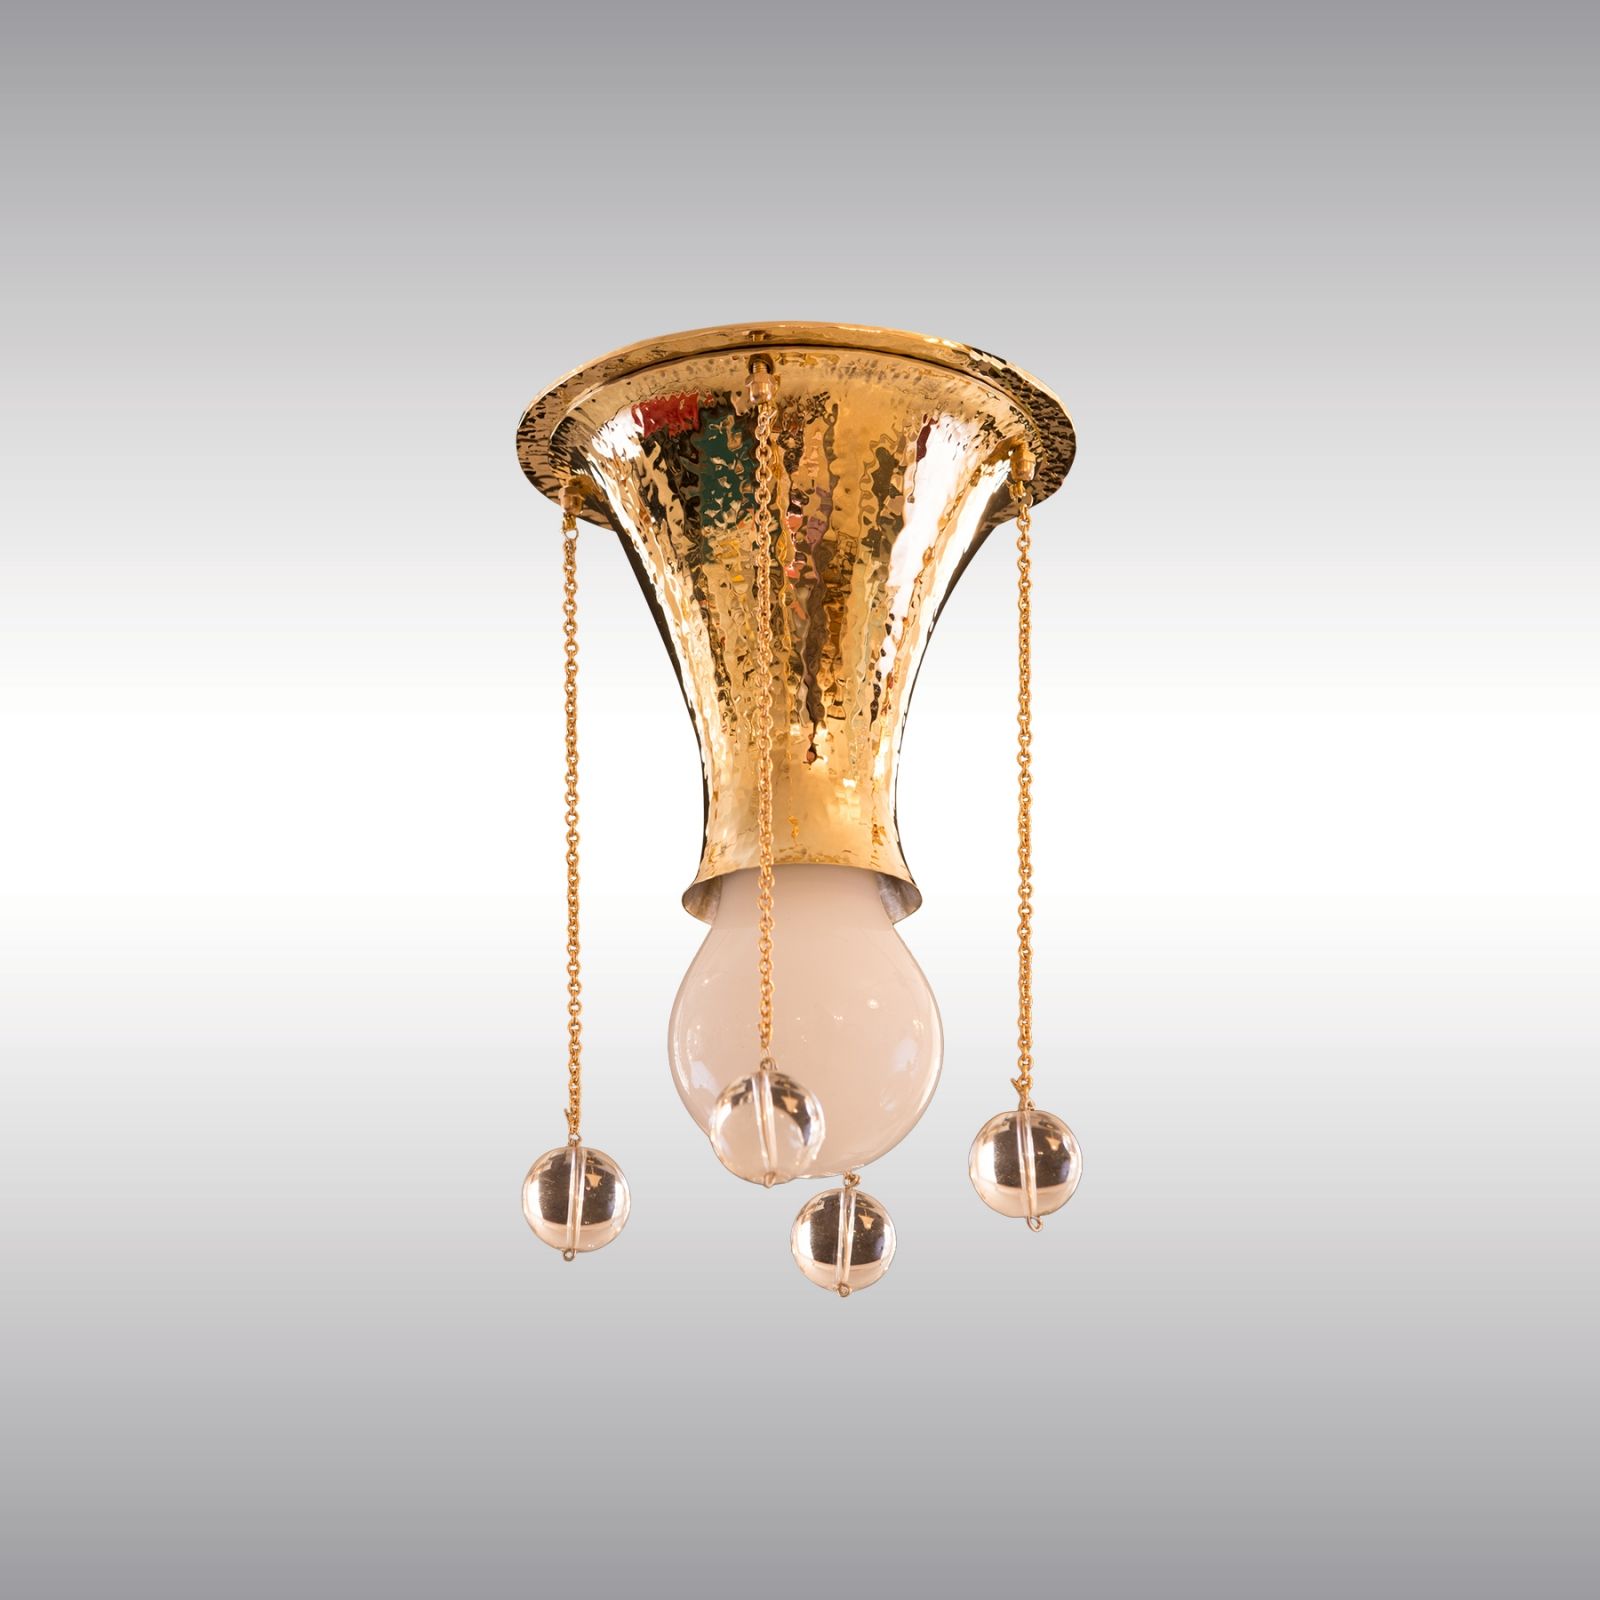 WOKA LAMPS VIENNA - OrderNr.: 22103|WW-Pende Flush - Design: Josef Hoffmann